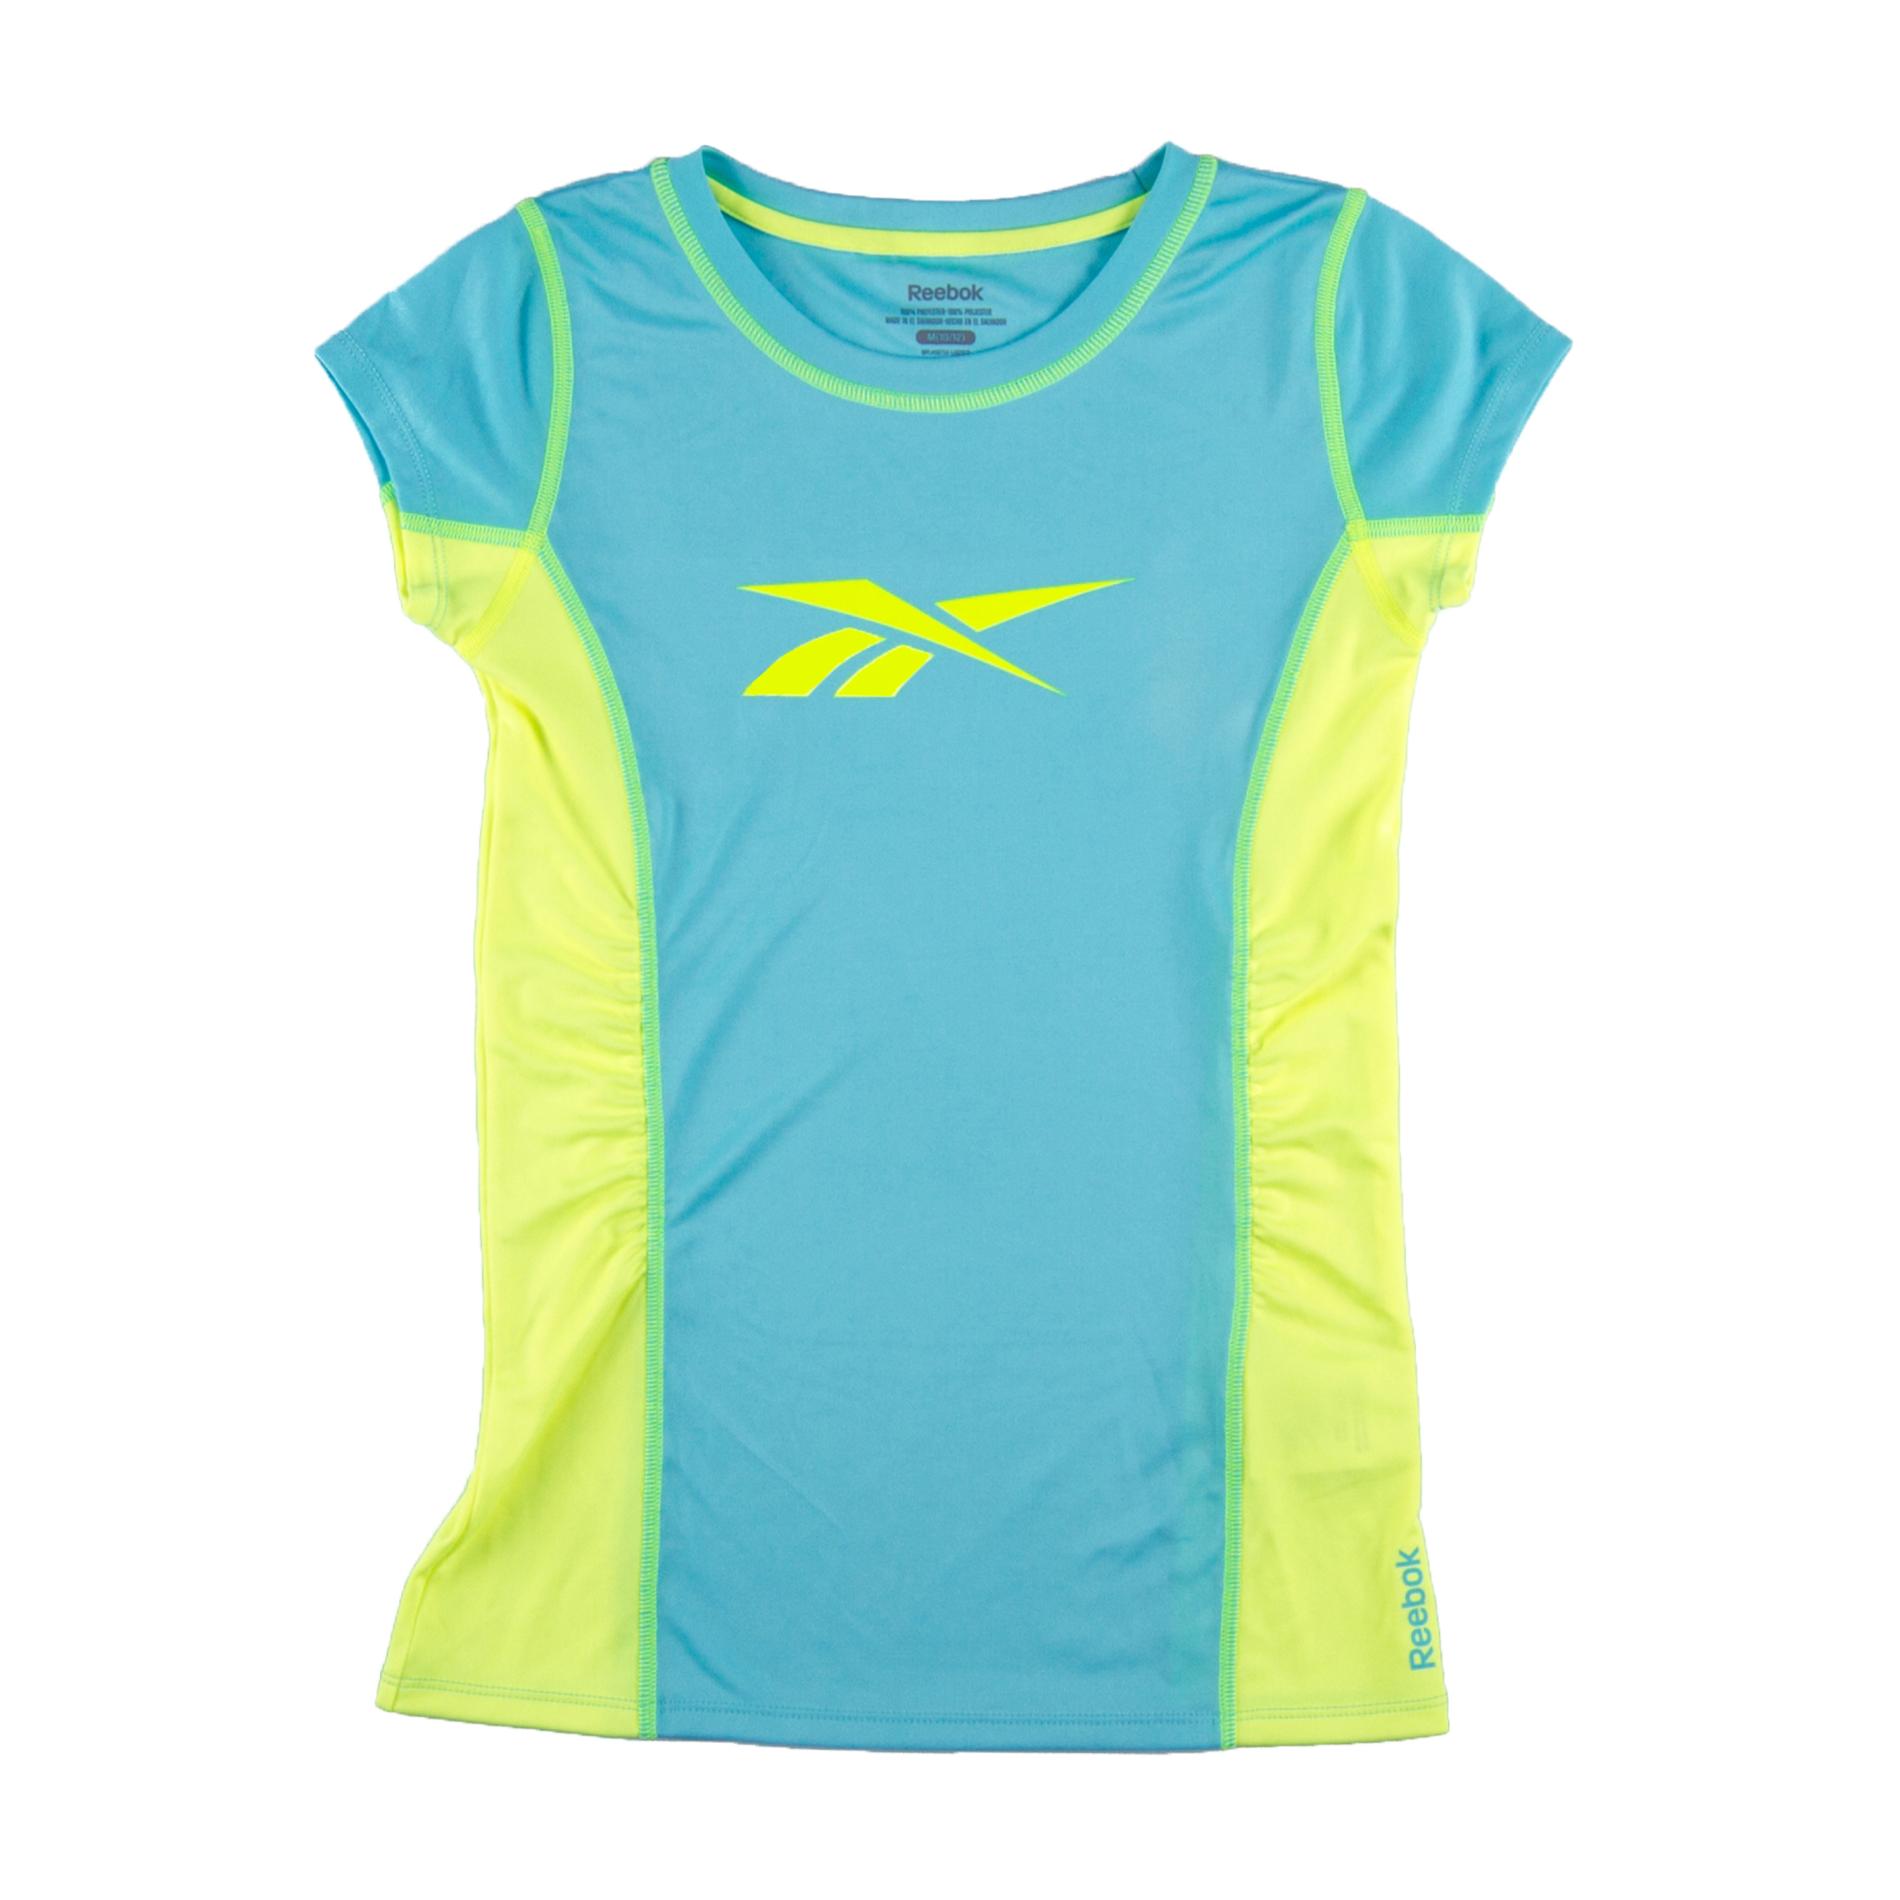 Reebok Girl's Short-Sleeve Athletic Top - Colorblock